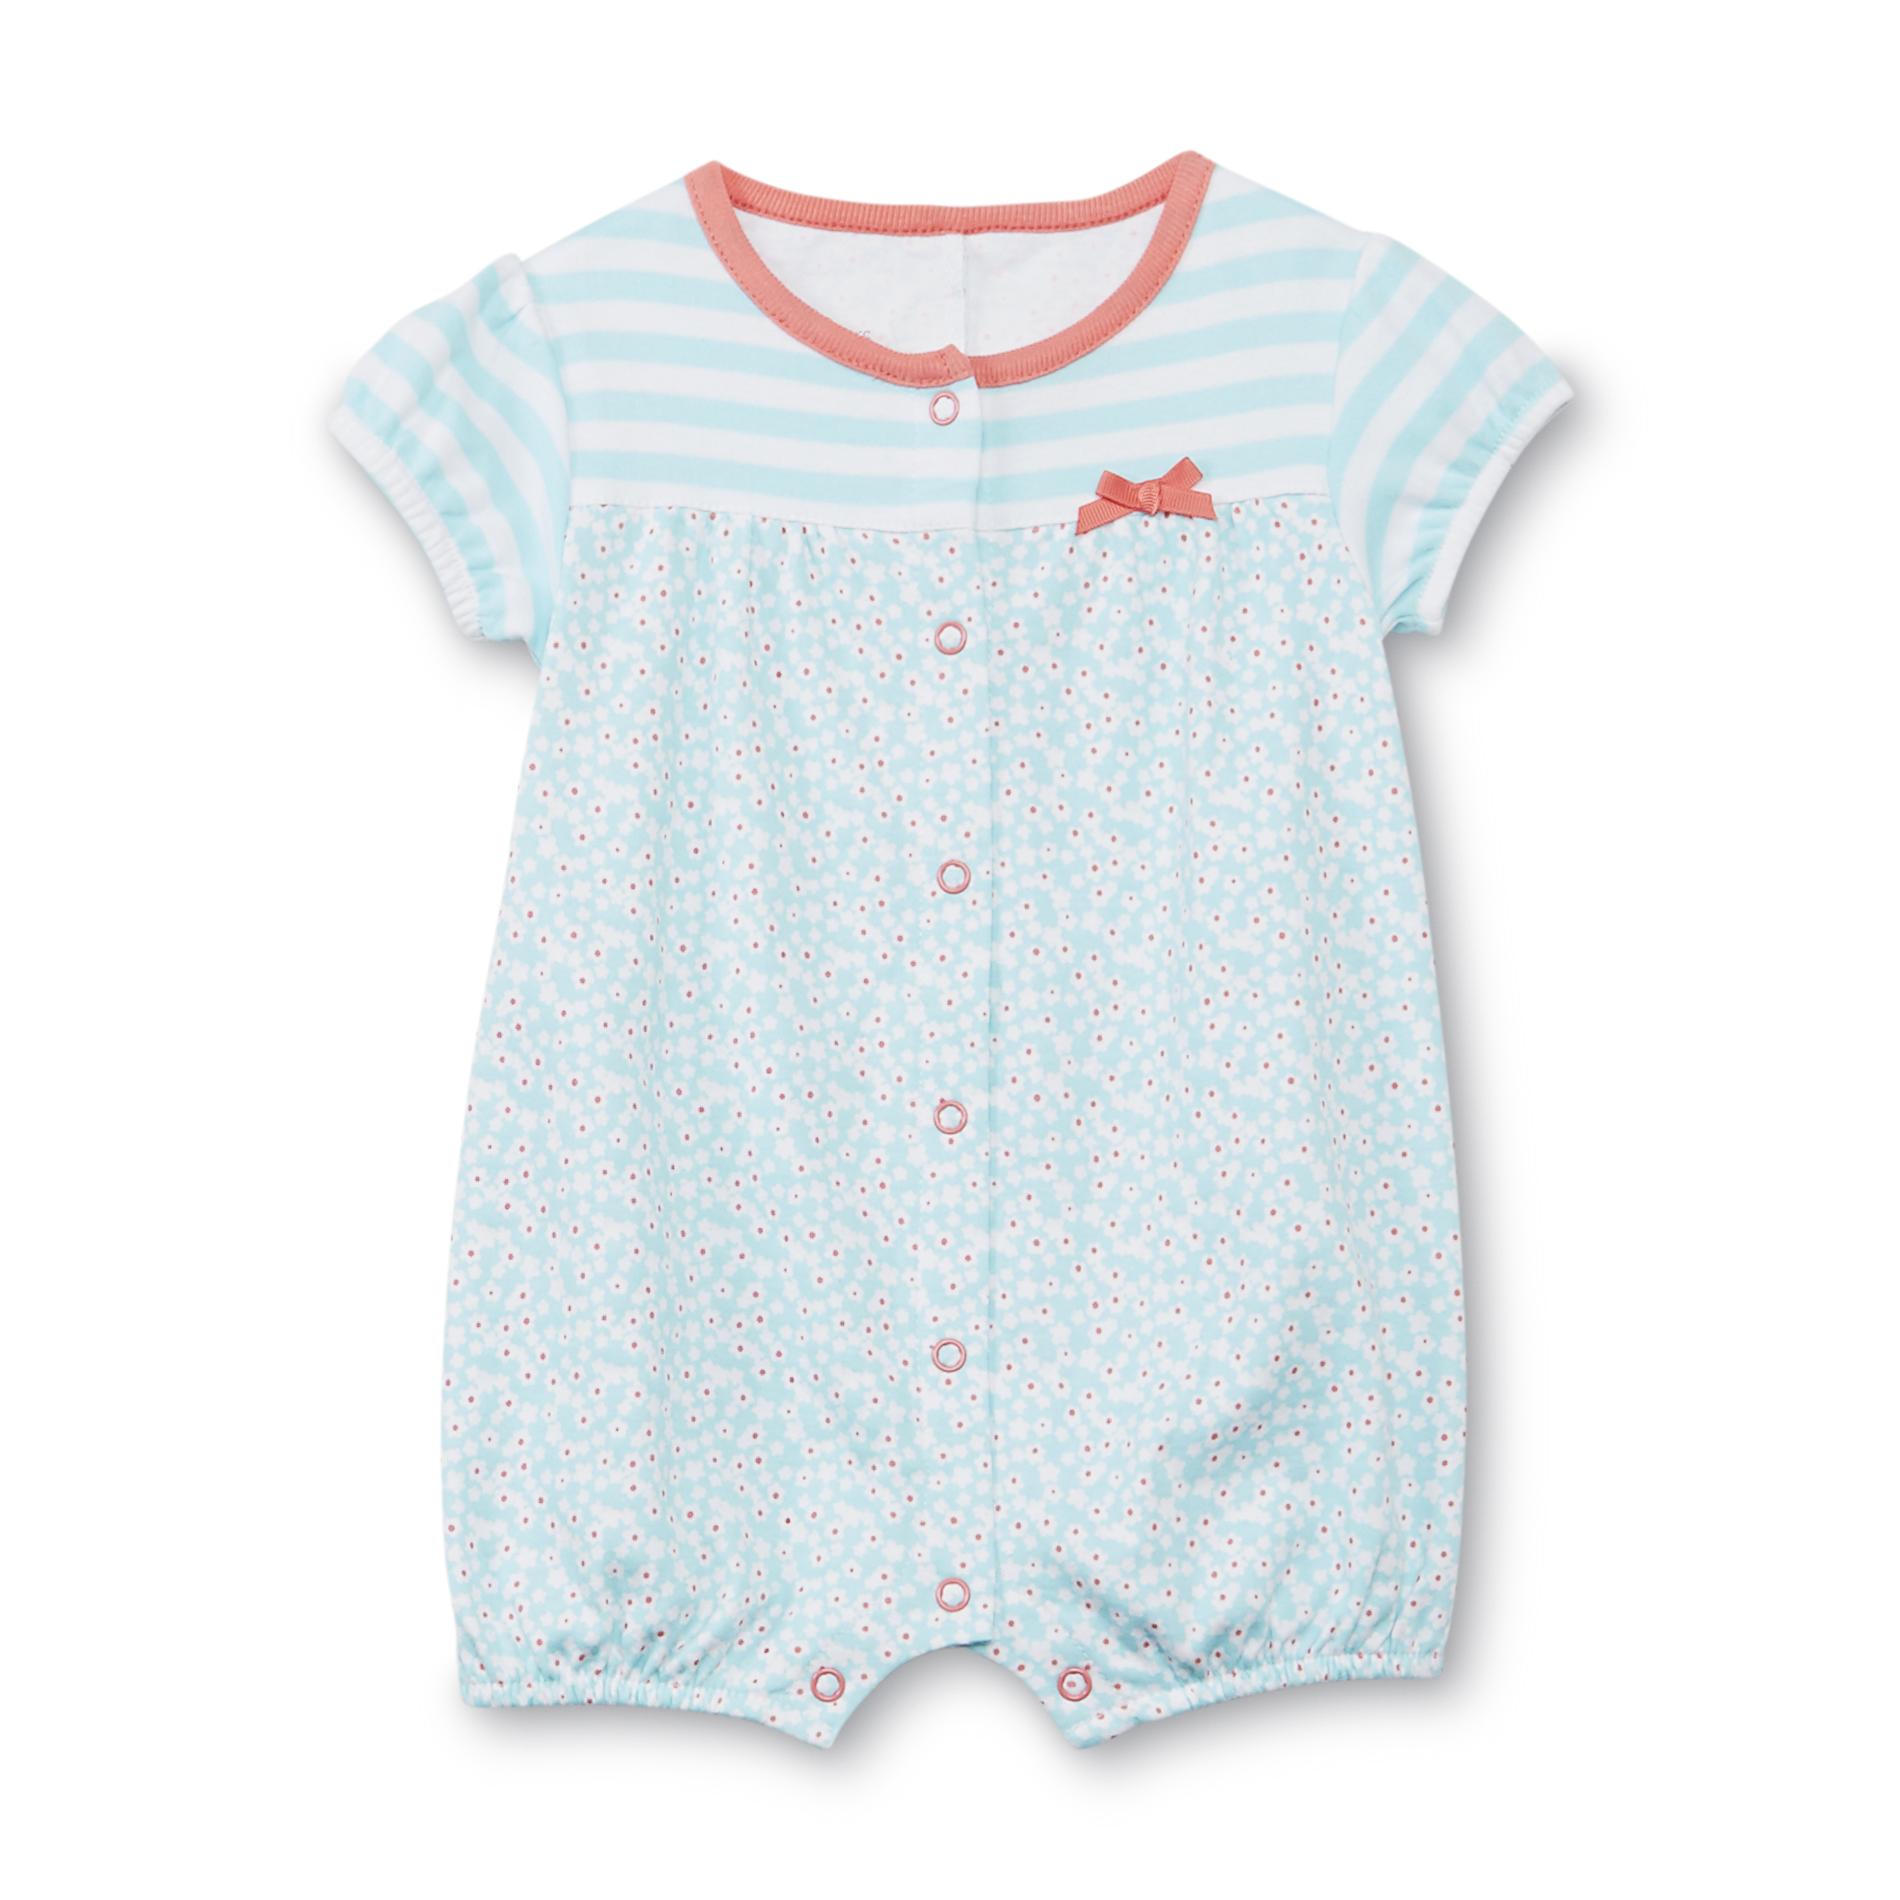 Little Wonders Newborn & Infant Girl's Romper - Floral & Stripes